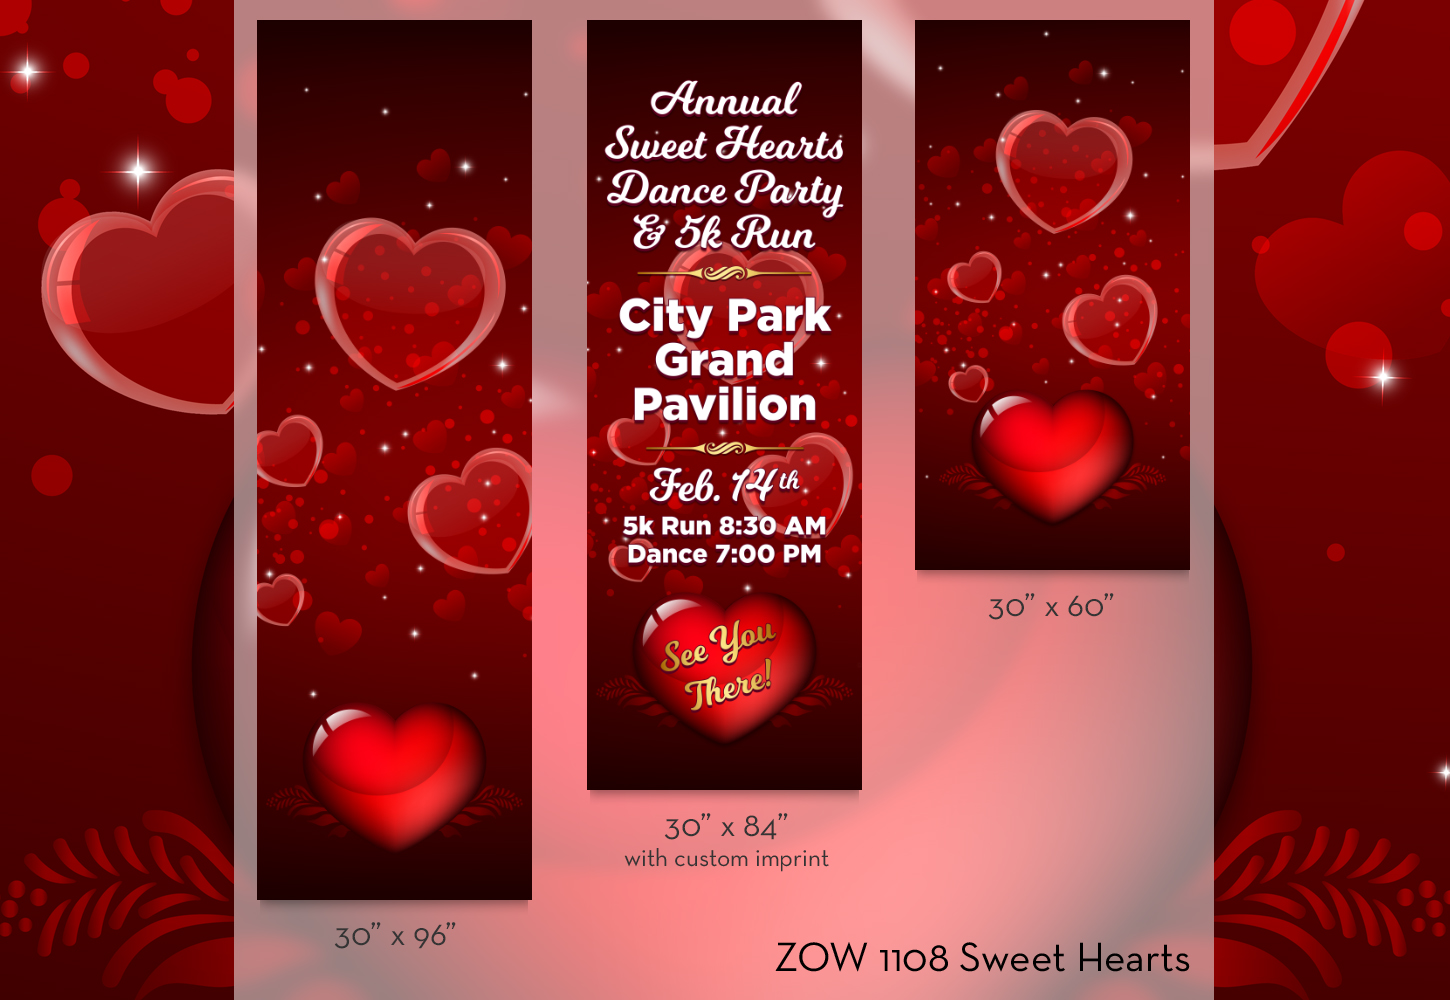 ZOW 1108 Sweet Hearts